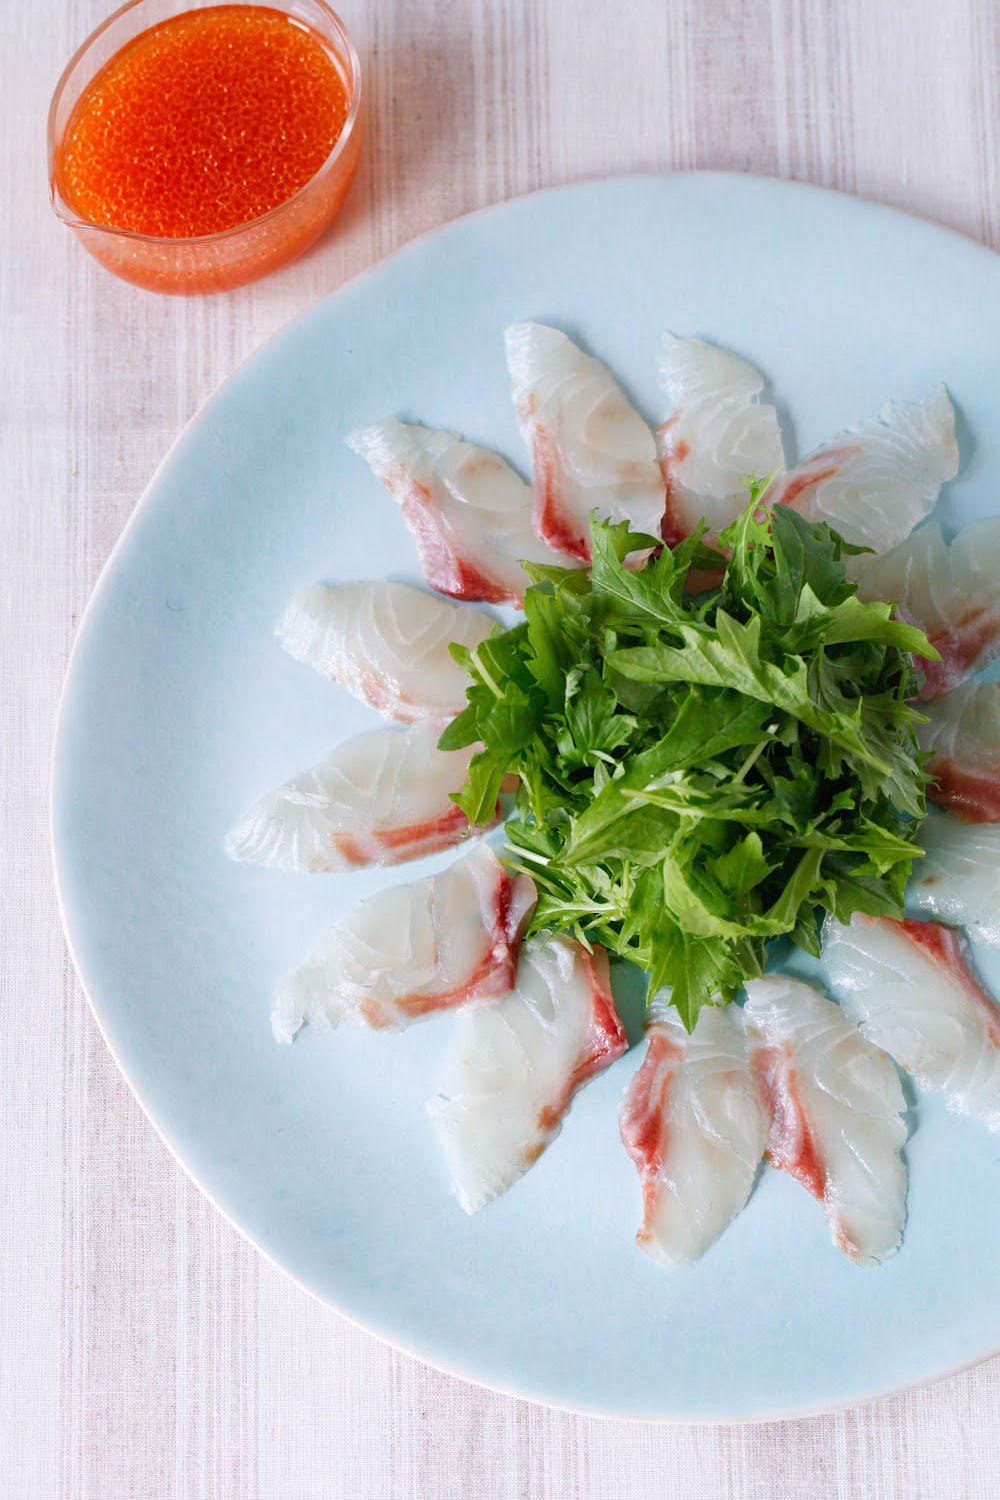 Sea bream sashimi photo, from sushi at home book